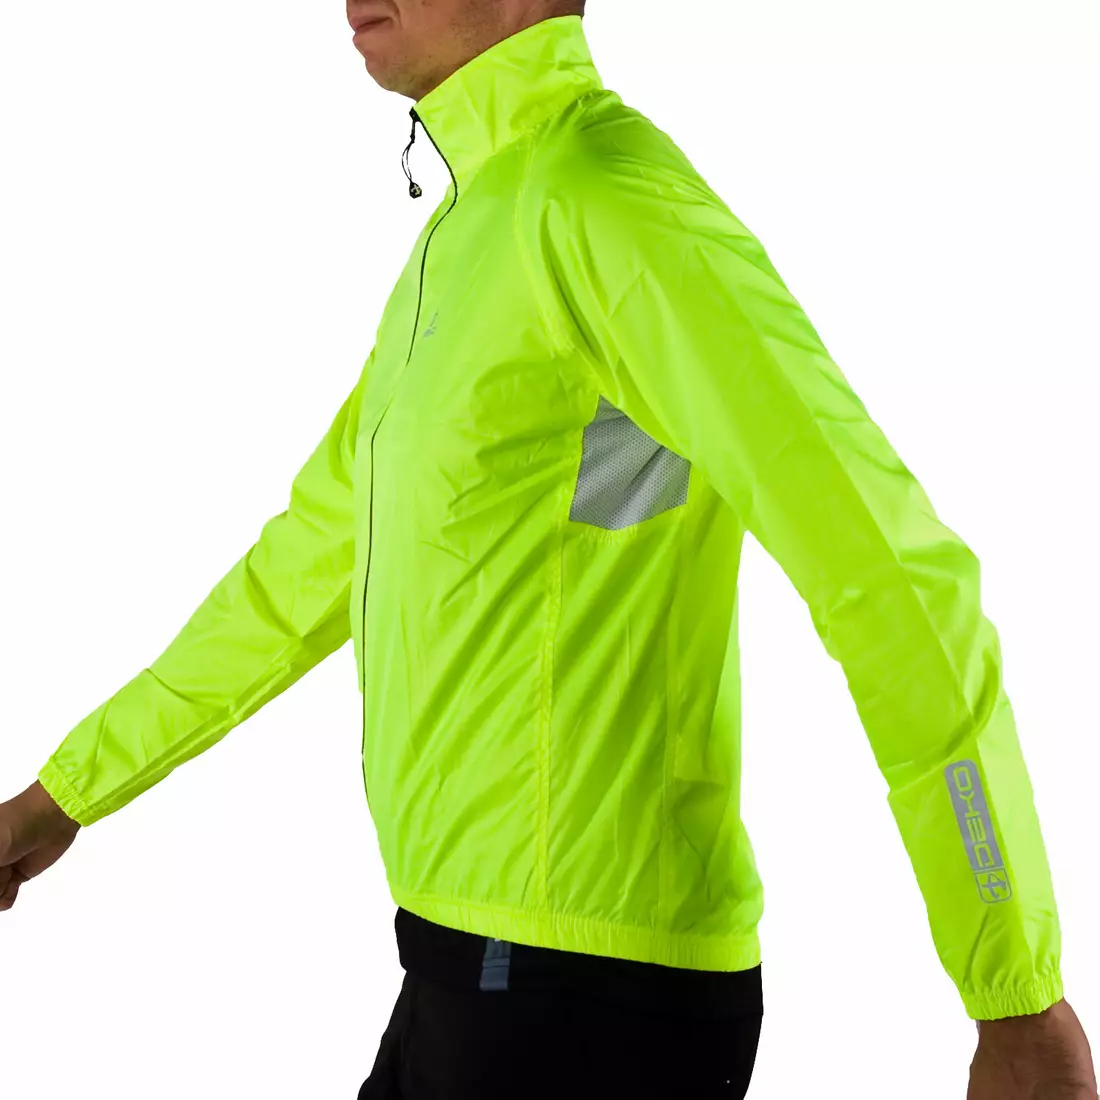 DEKO RAIN 2 light rain cycling jacket, fluor yellow